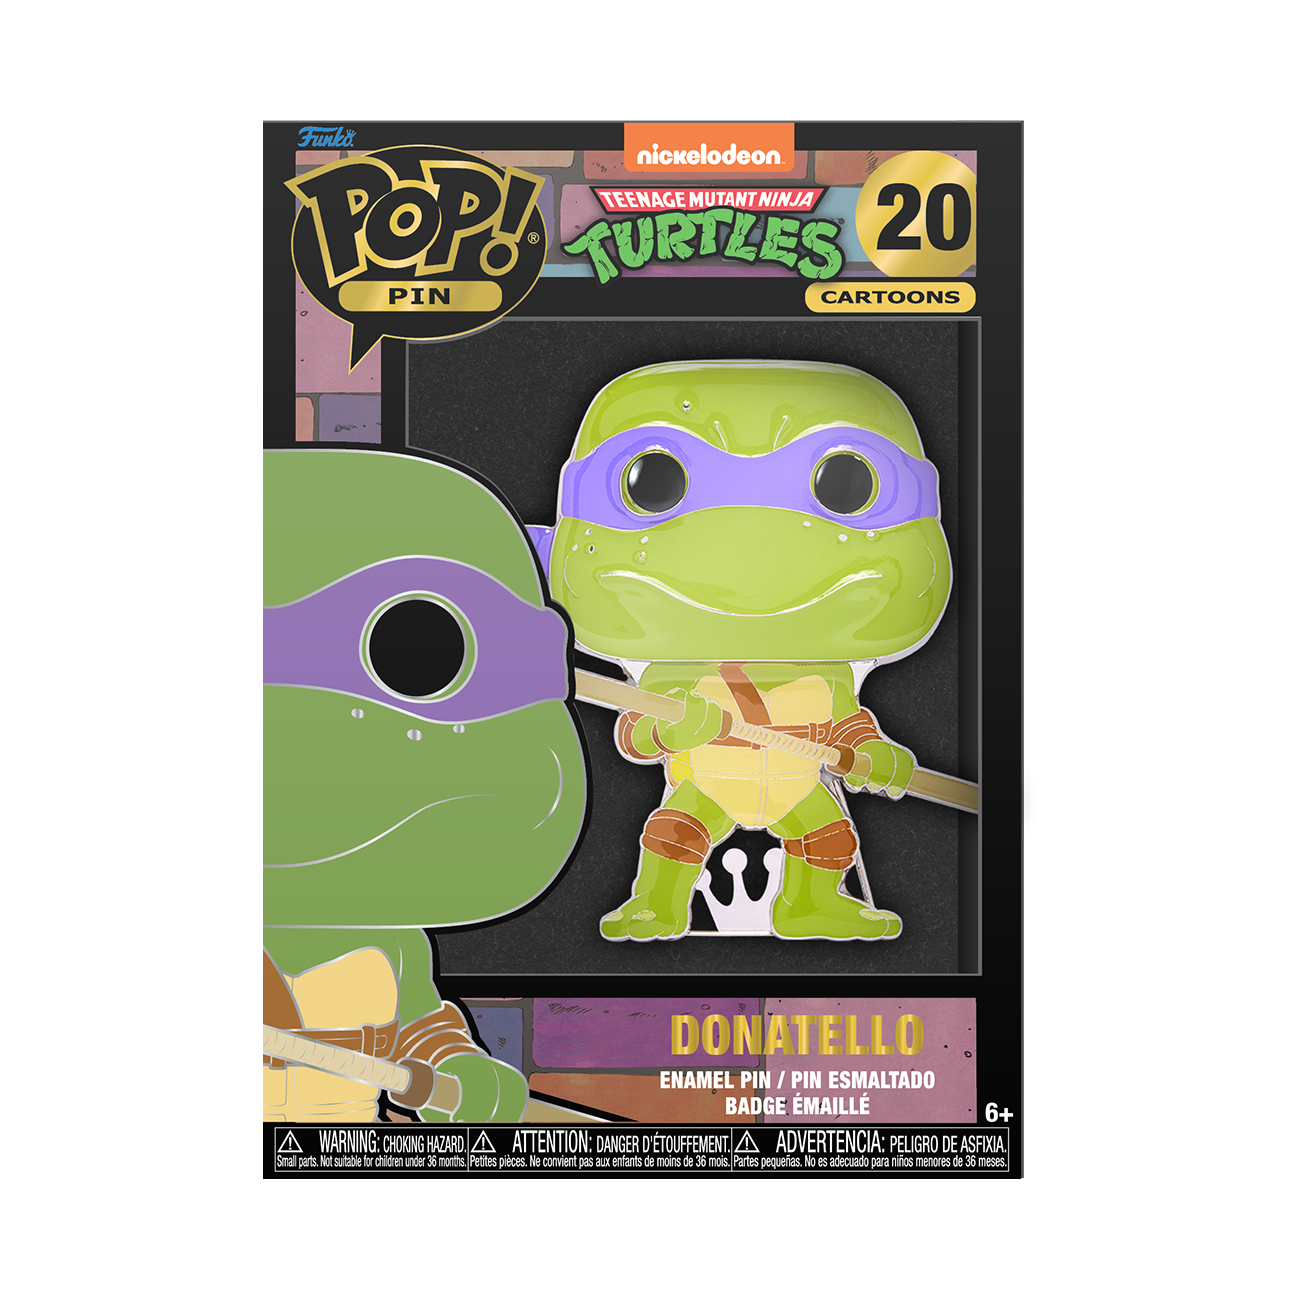 Donatello Teenage Mutant Ninja Turtles Funko Pop! Pin